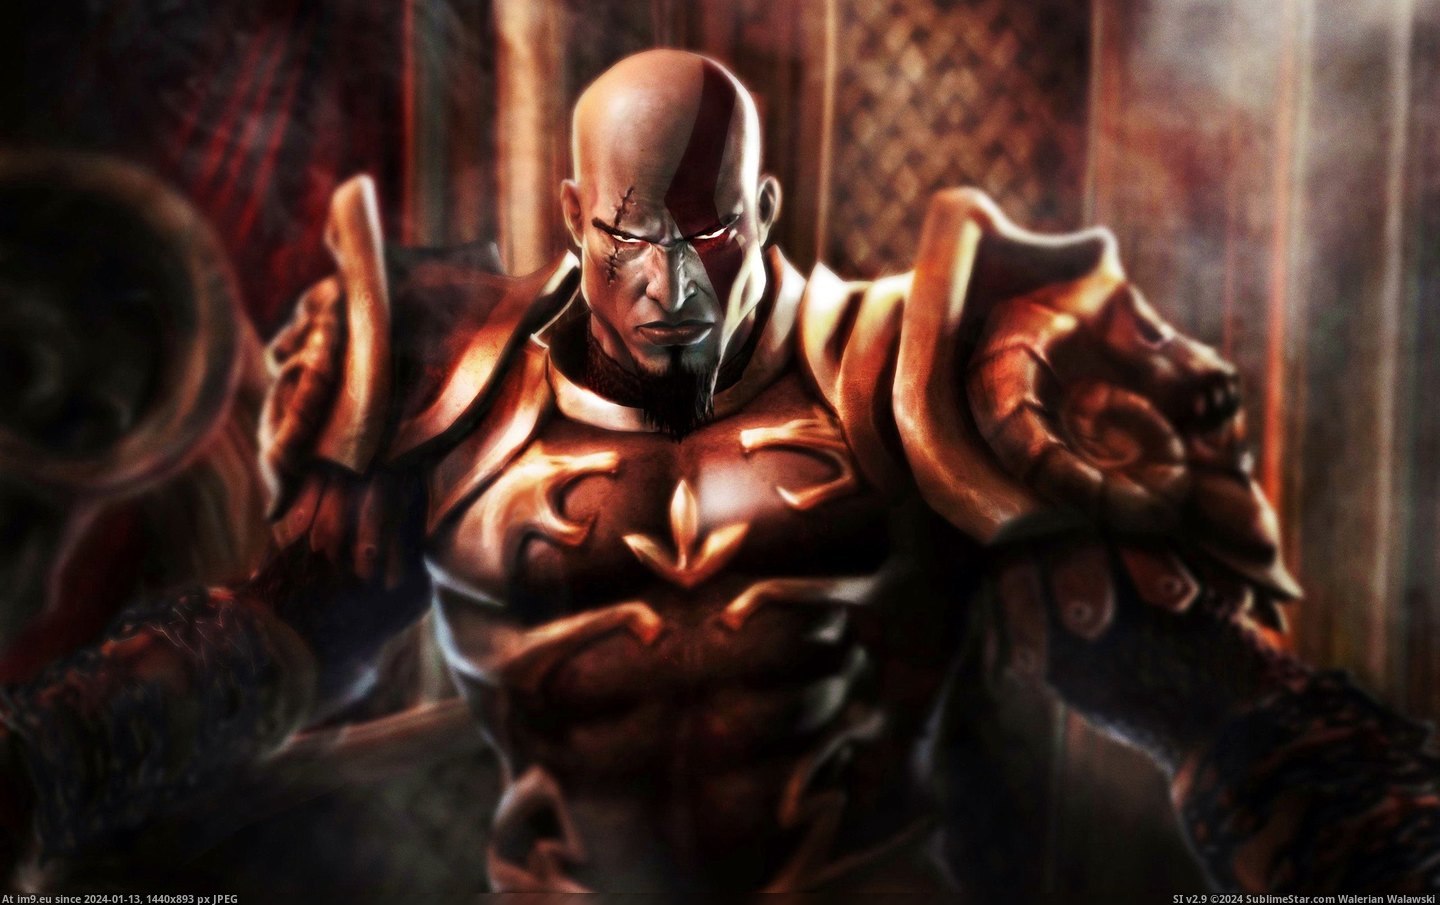 #Wallpaper #Wide #Kratos #War #God Kratos God Of War Wide HD Wallpaper Pic. (Bild von album Unique HD Wallpapers))